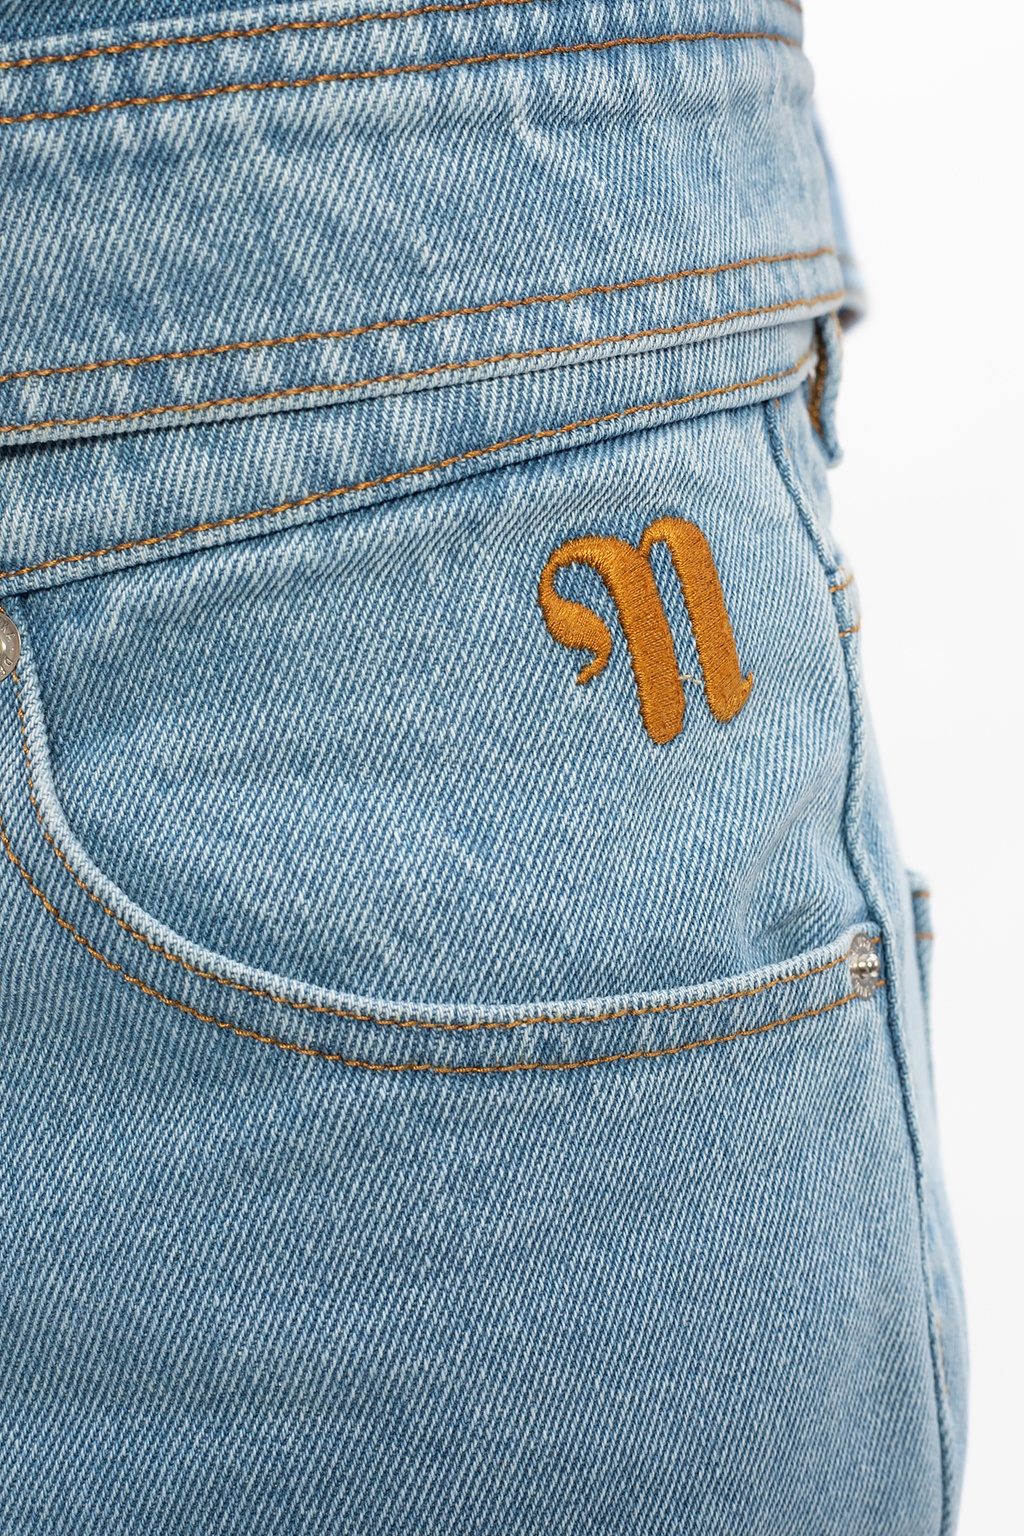 Nanushka ‘Ilya’ jeans with logo